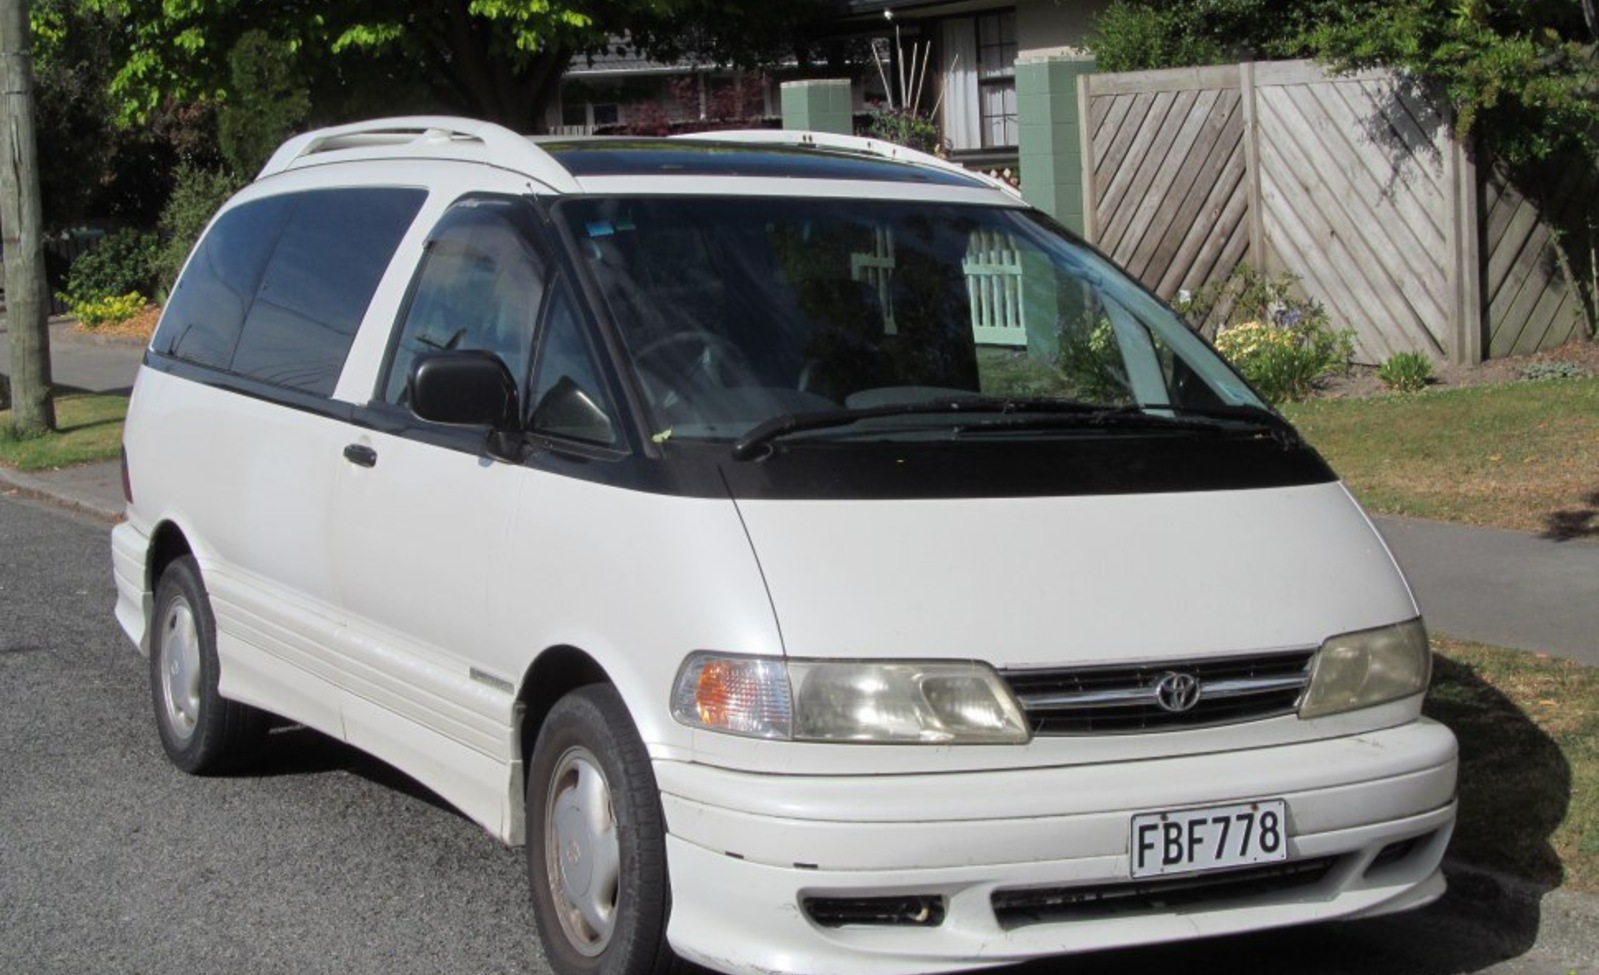 Toyota Estima I 2.4 i (132 Hp) 1990, 1991, 1992, 1993, 1994, 1995, 1996, 1997, 1998, 1999 